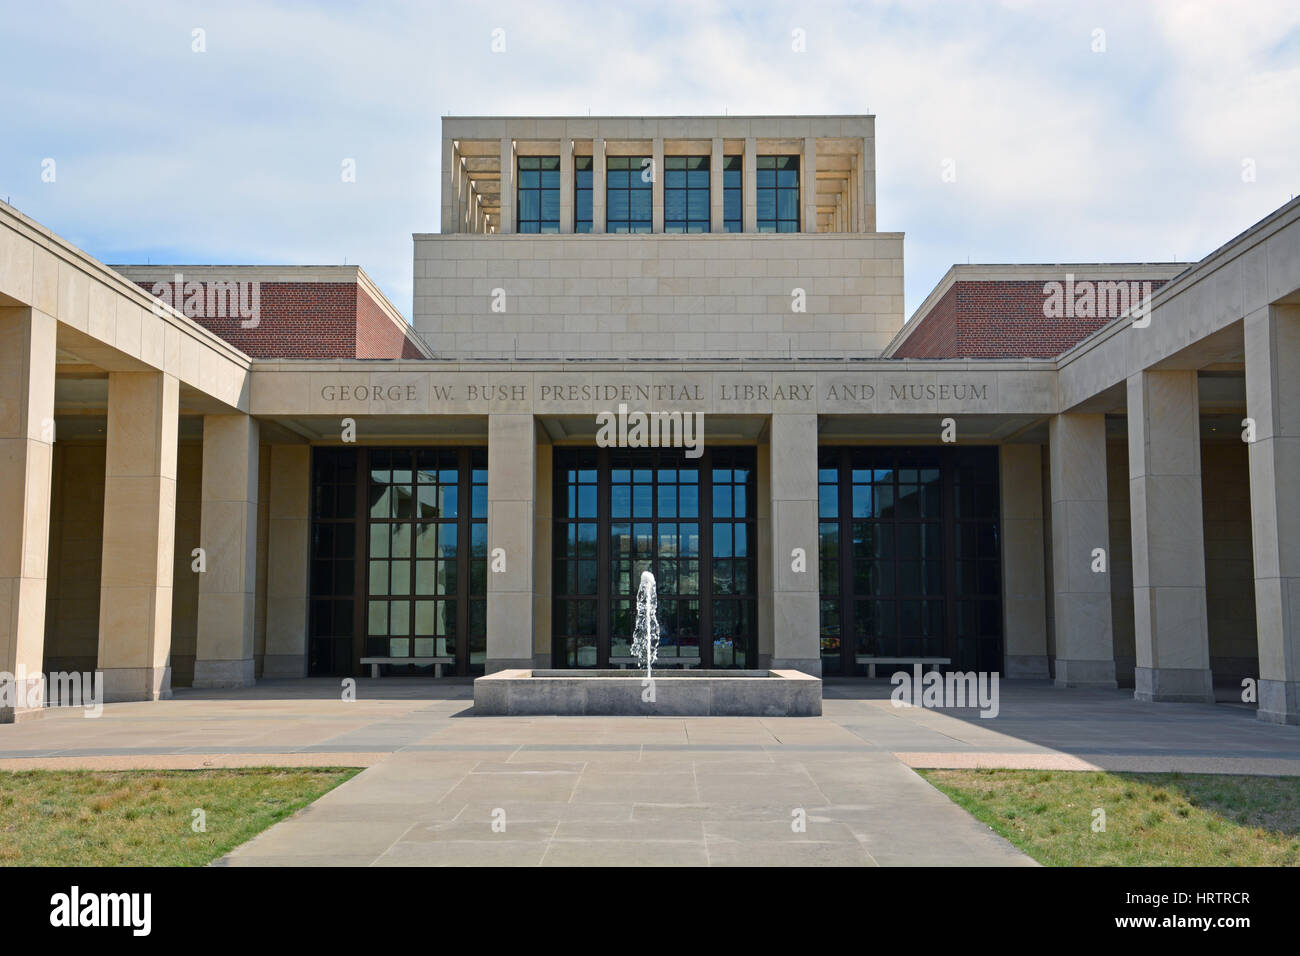 Der Eingang in die George W Bush Presidential Library and Museum auf dem Campus der Southern Methodist University in Dallas, Texas. Stockfoto